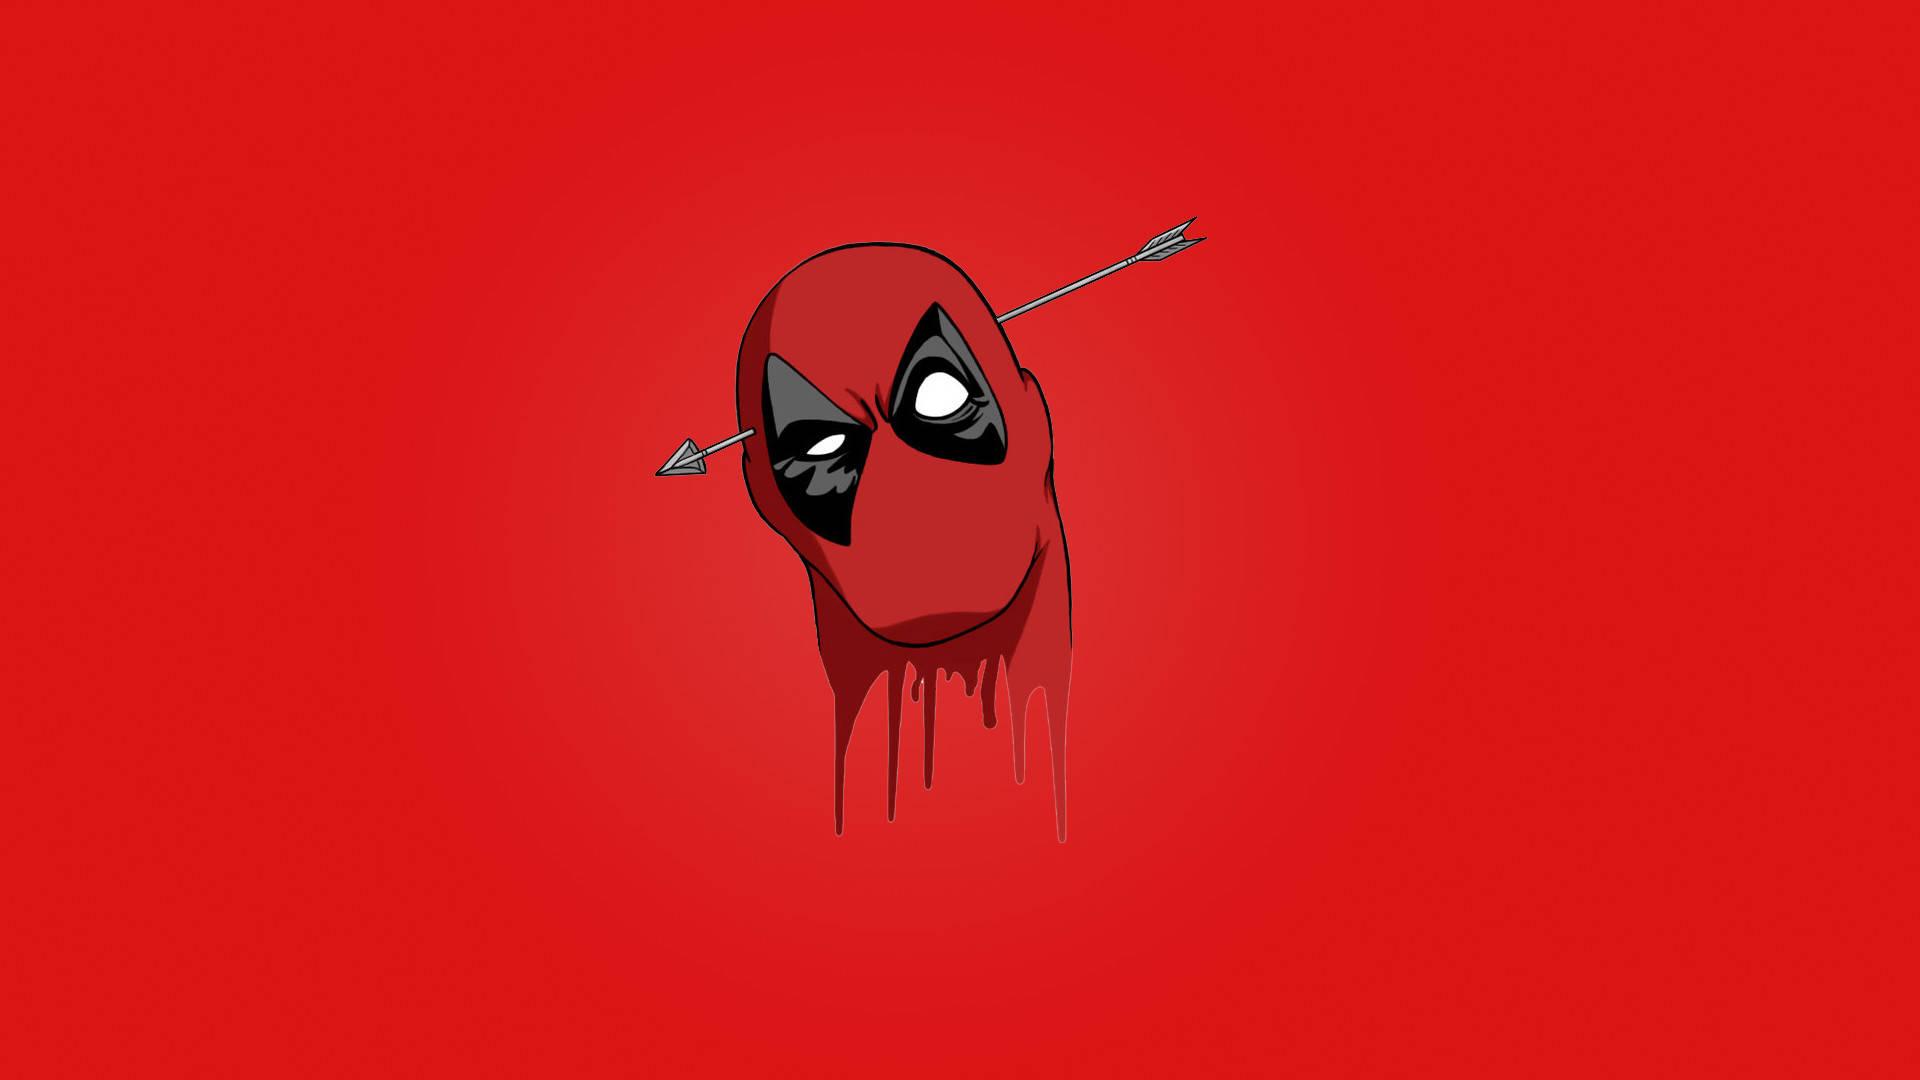 Deadpool wallpaper | HeroScreen Wallpapers | Deadpool wallpaper, Deadpool,  Deadpool art